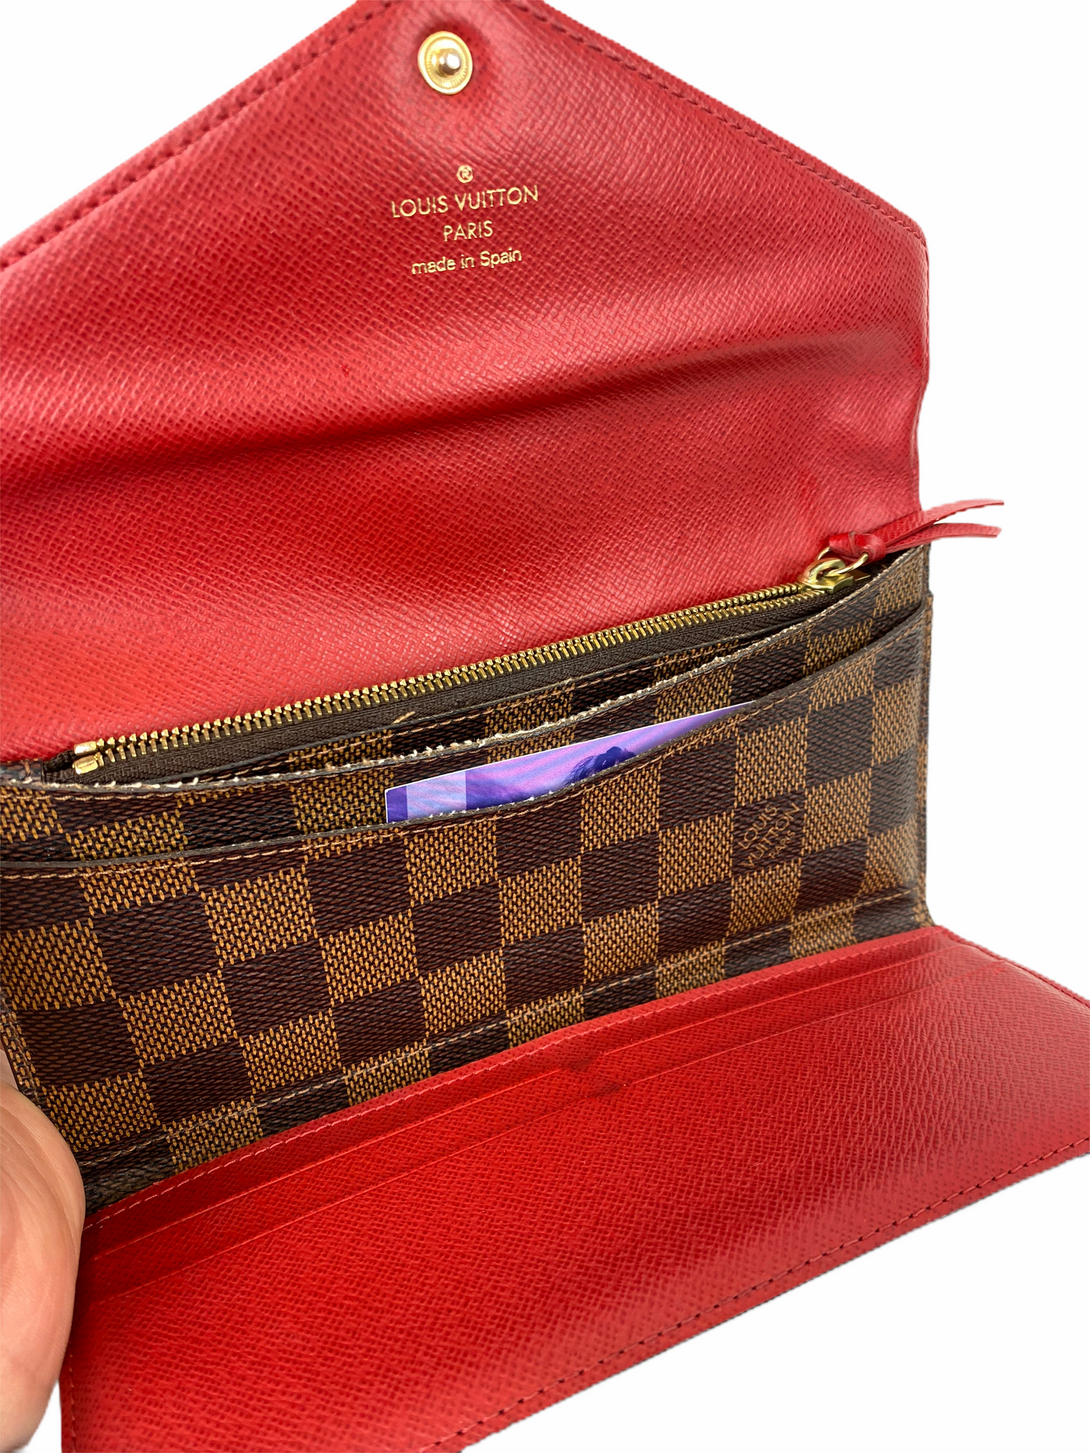 Louis Vuitton Damier Ebene Wallet - As Seen on Instagram 30/08/2020 - Siopaella Designer Exchange